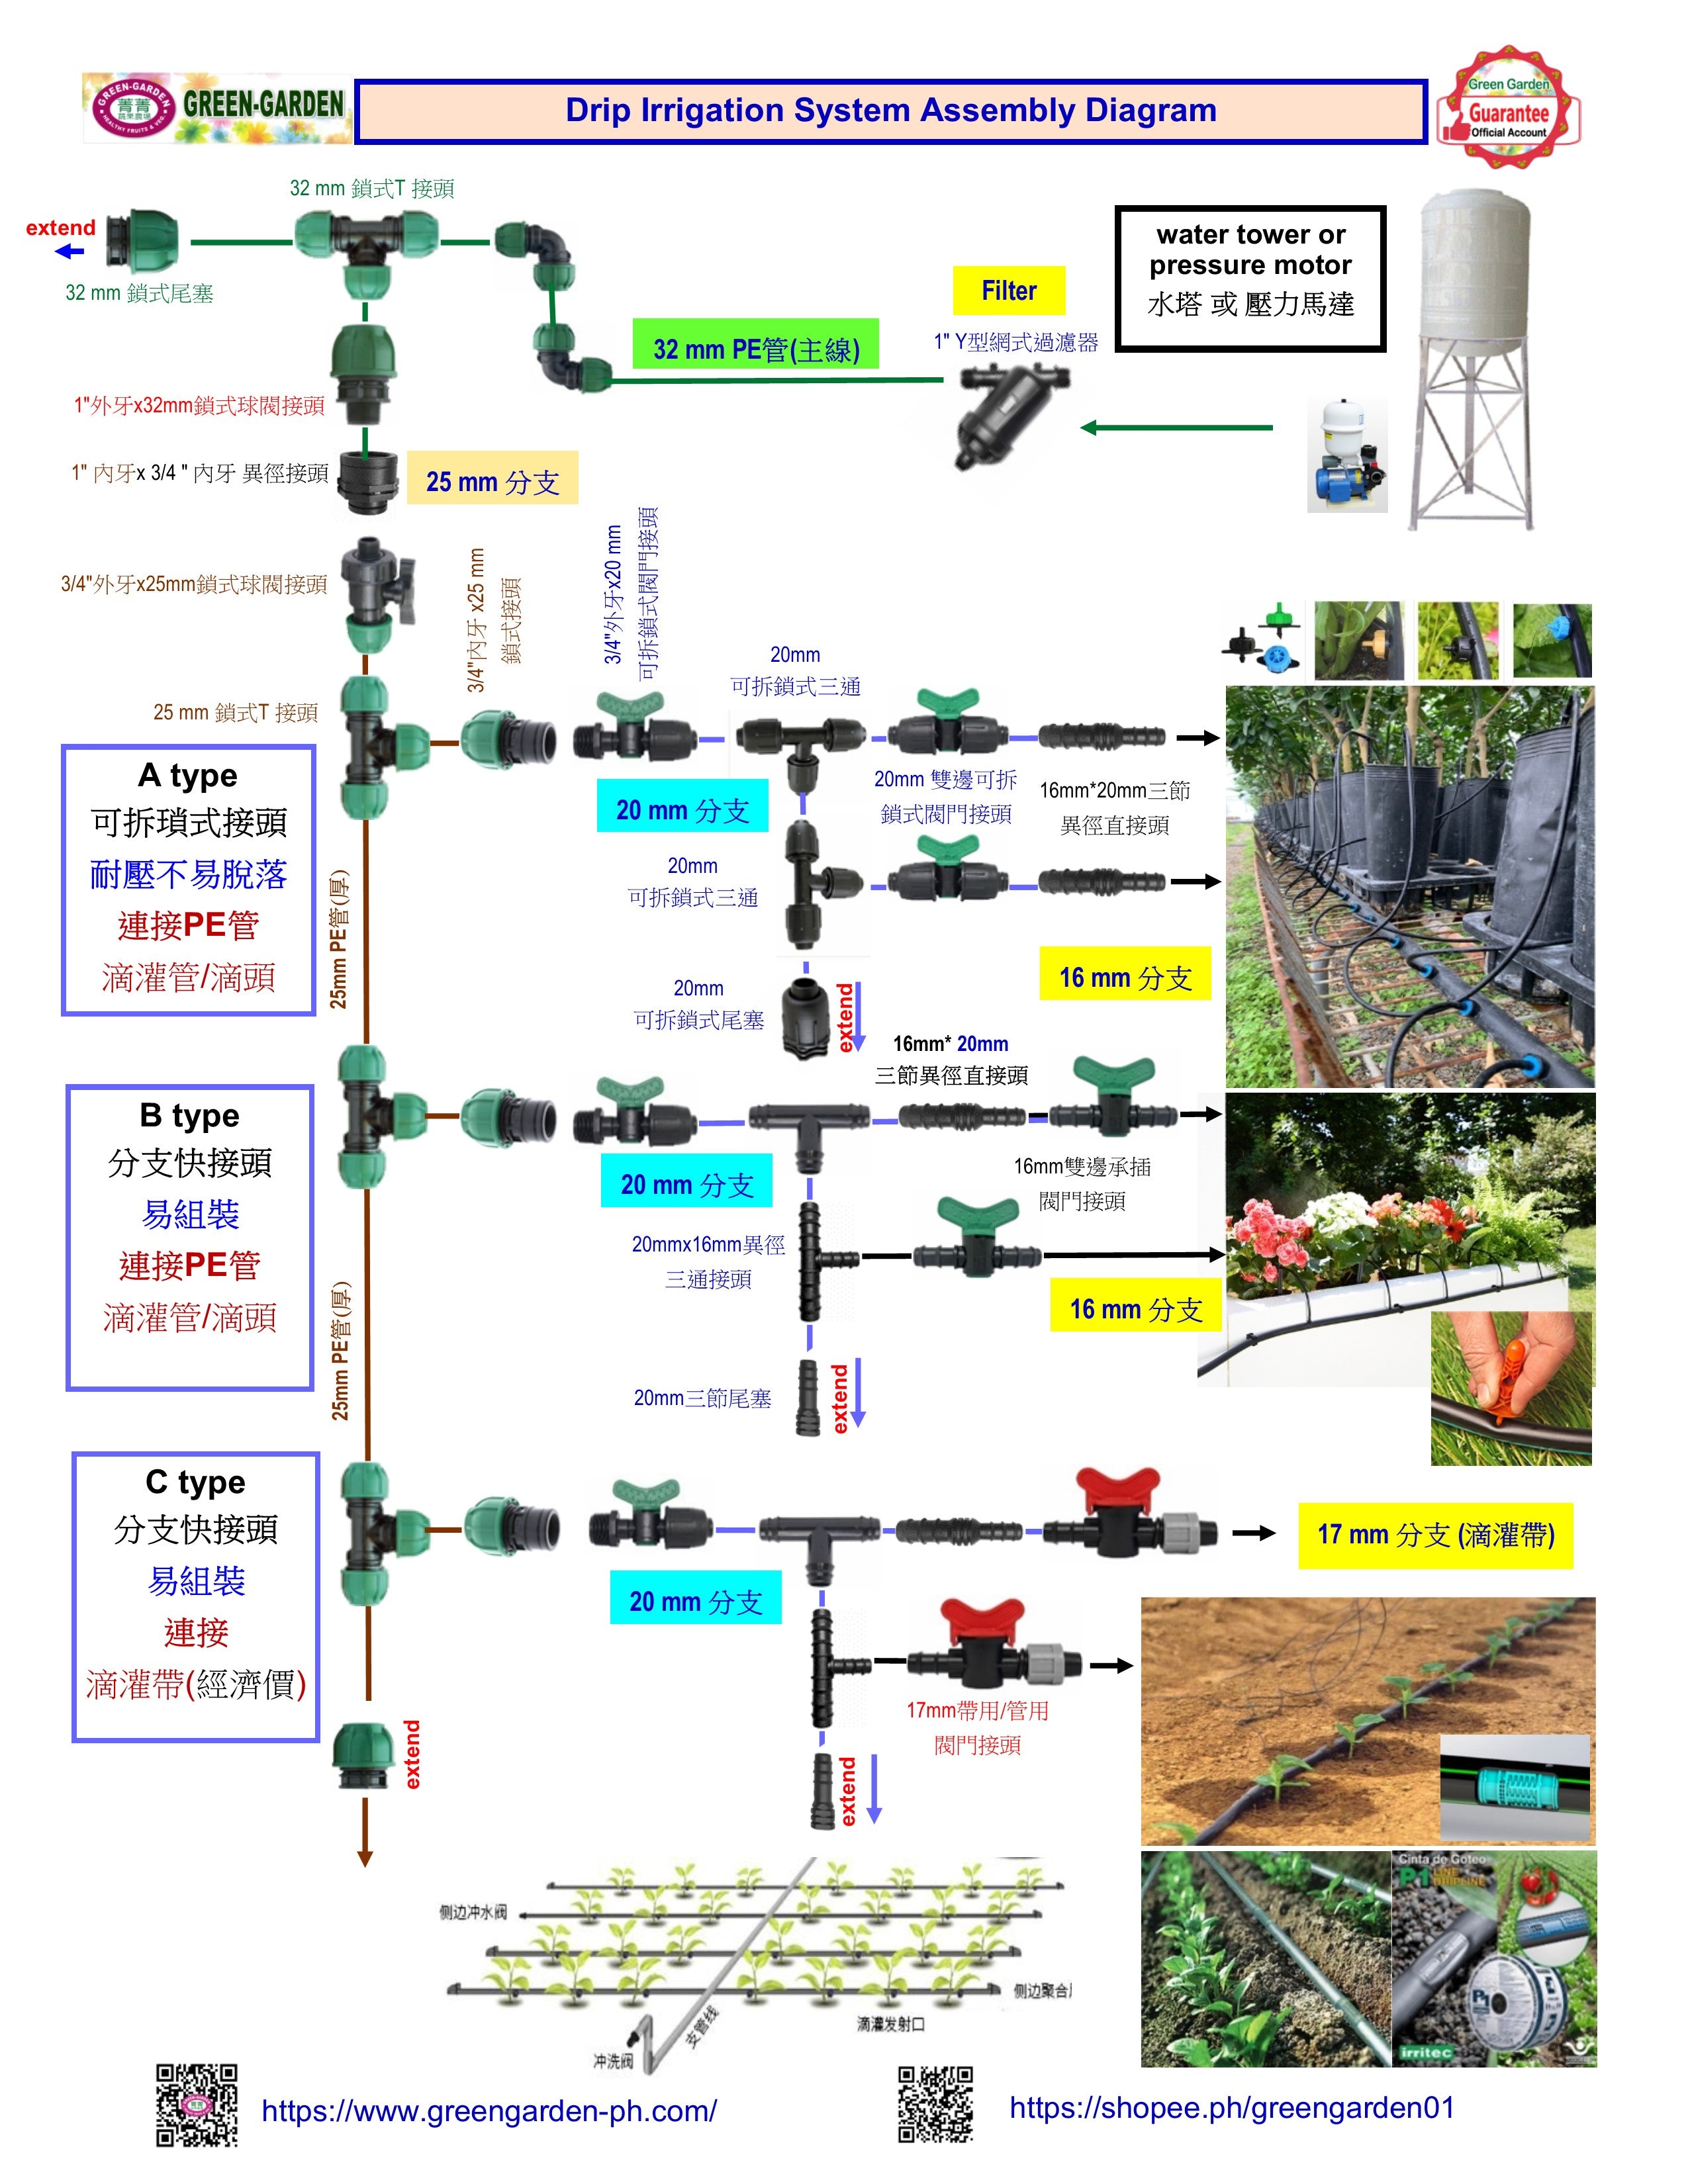 Drip Irrigation System -16mm Pipe Filter BG83